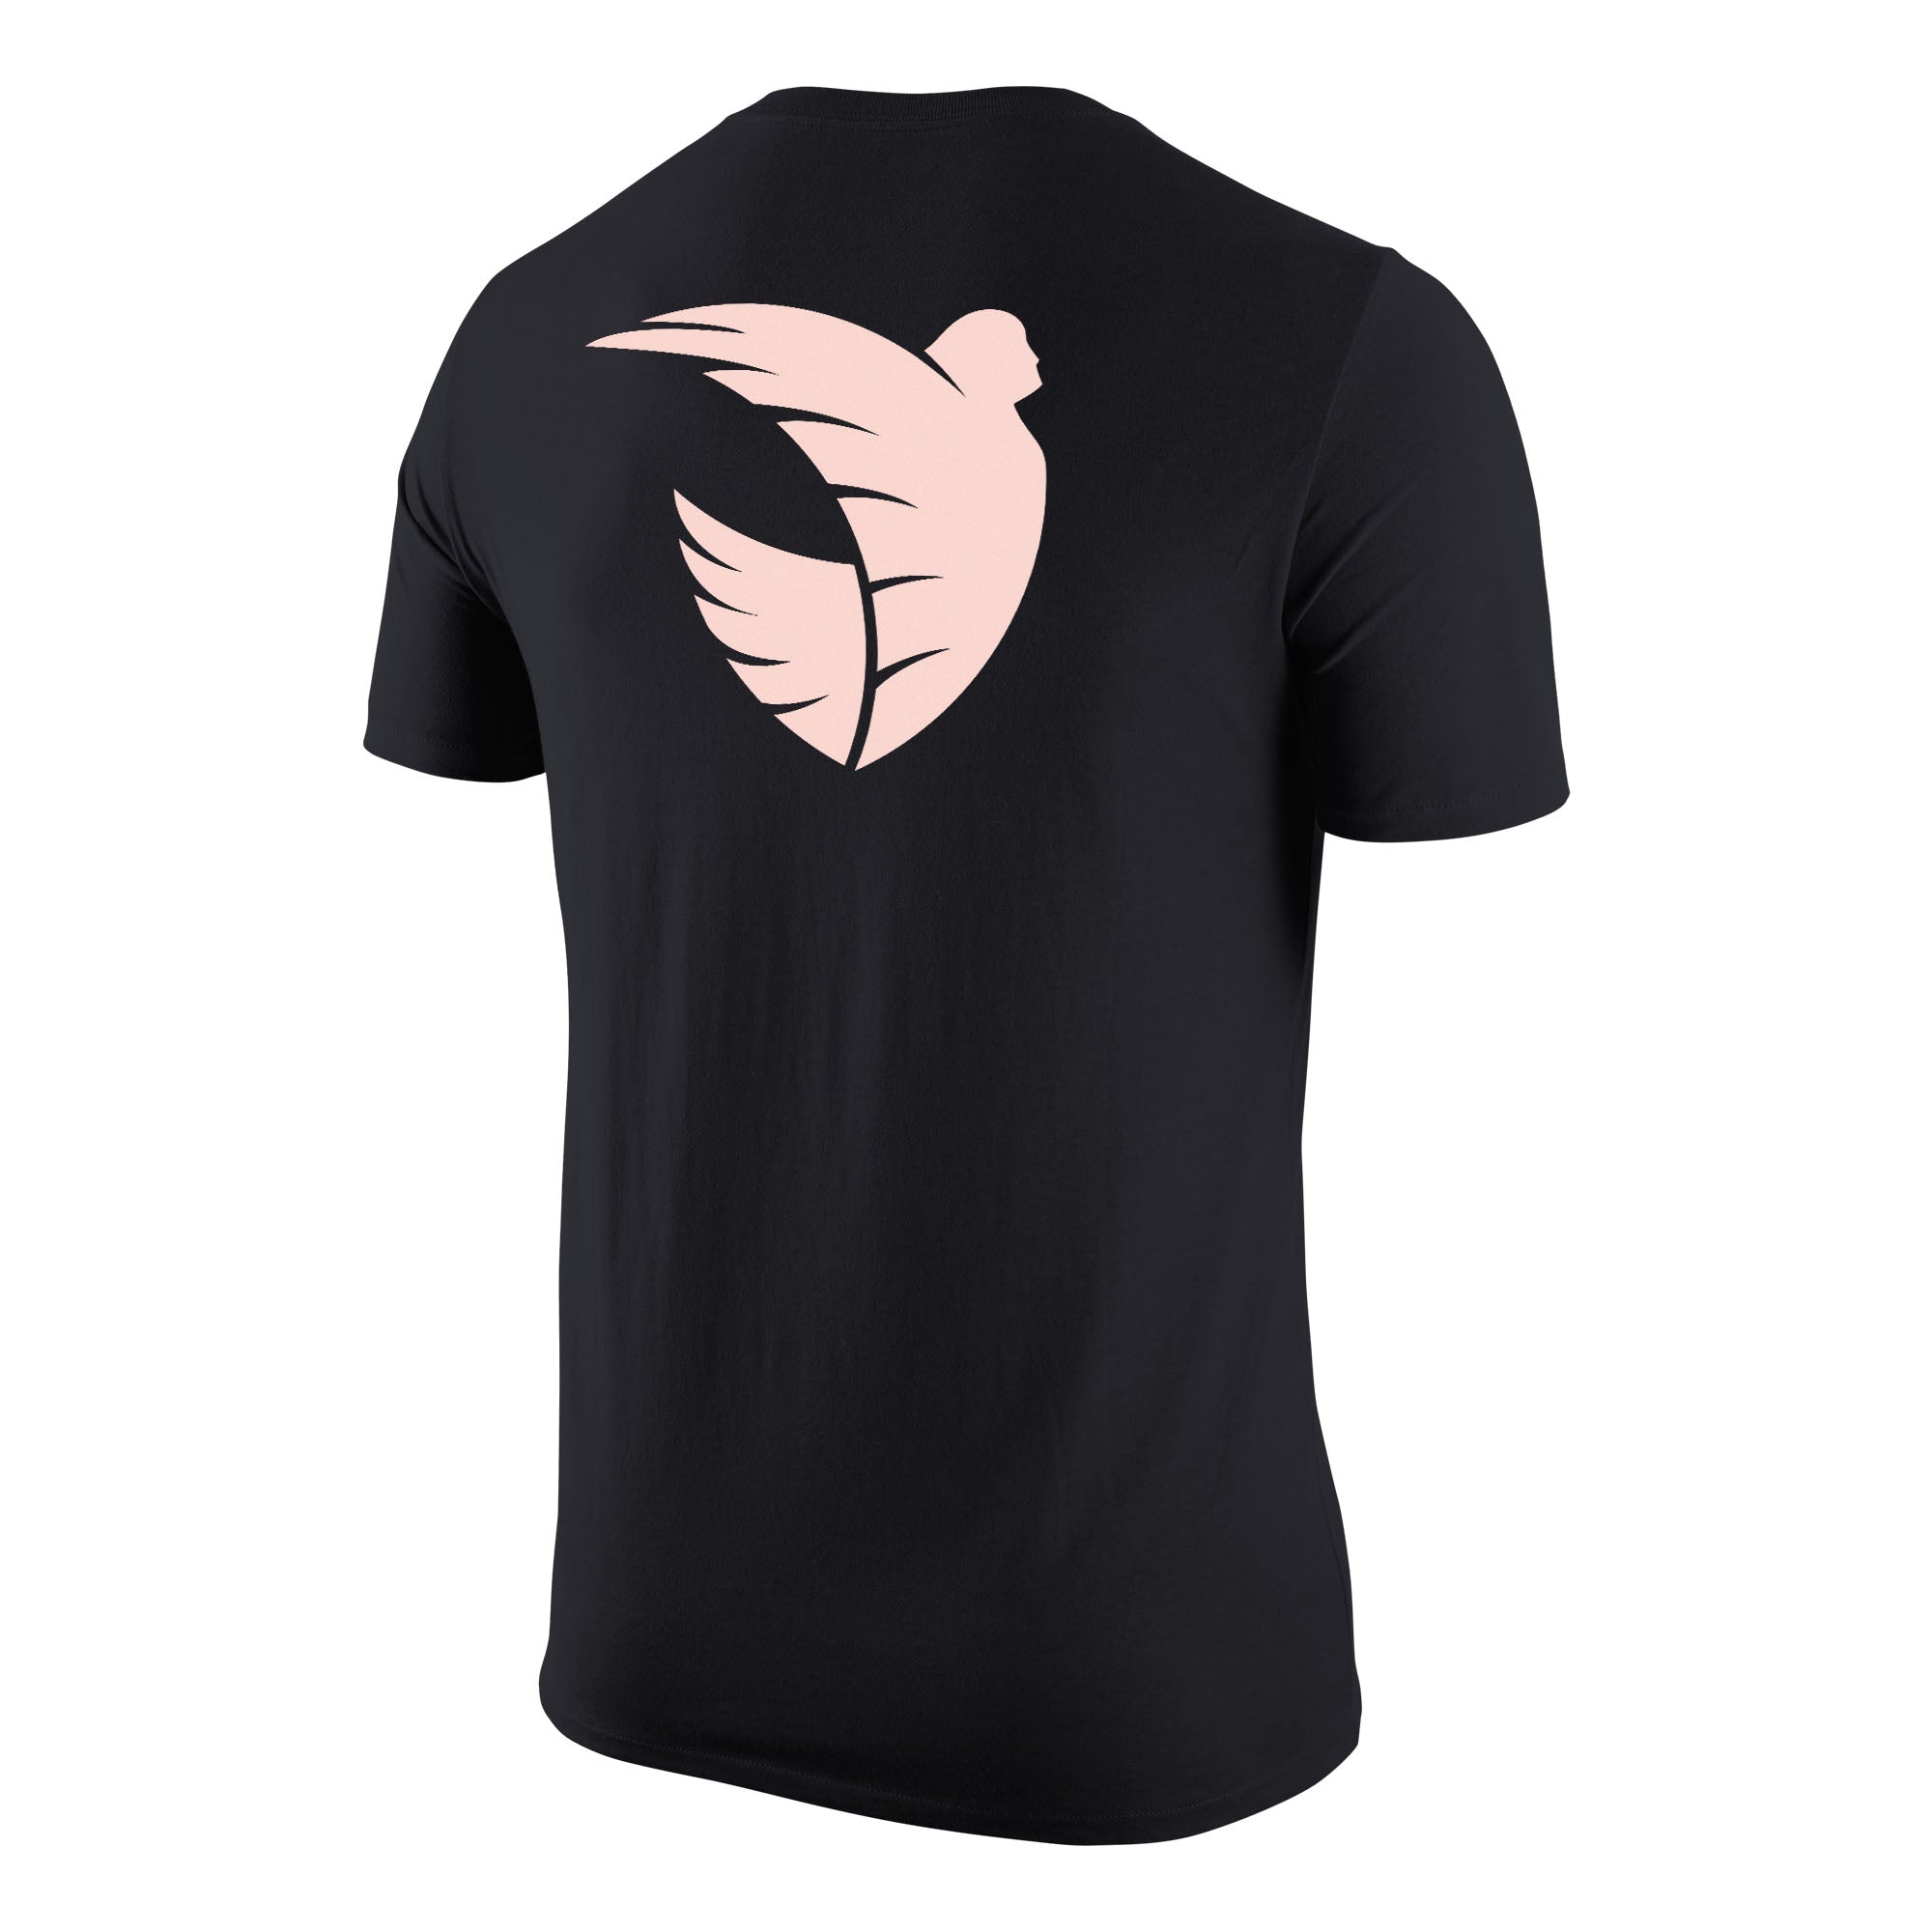 Angel City Nike - Camiseta unisex de manga corta con emblema Sol Rosa, color negro